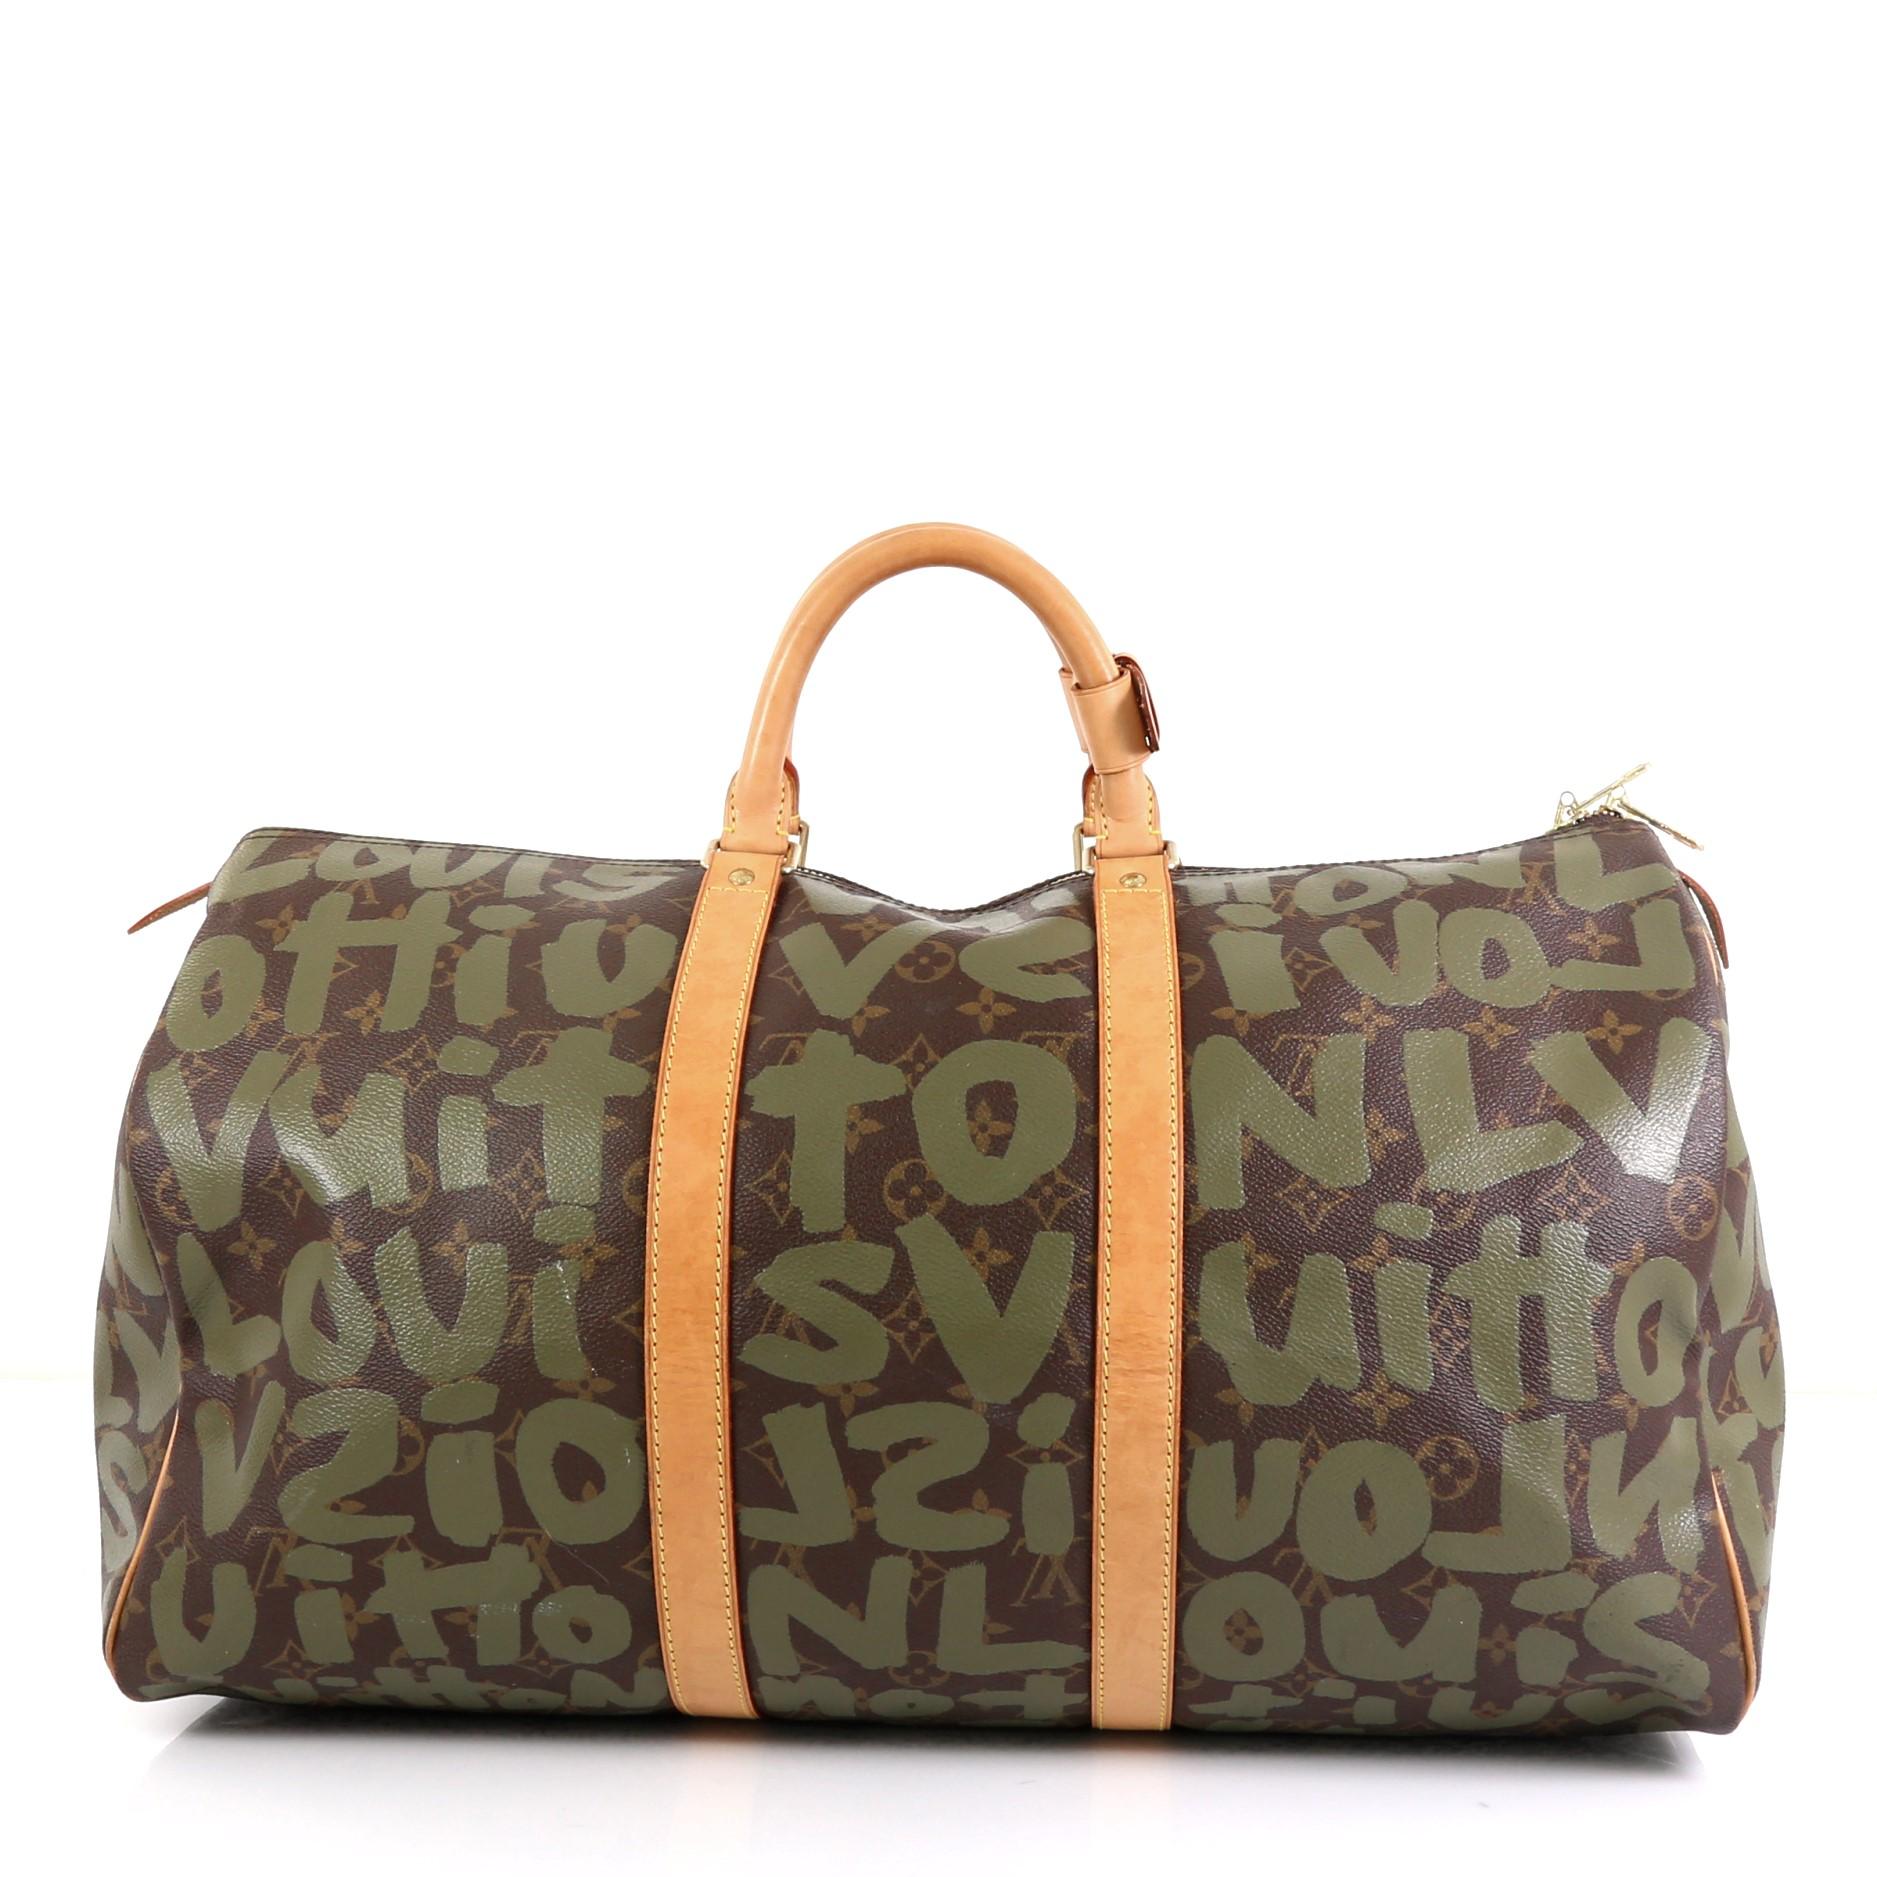 Brown Louis Vuitton Keepall Bag Limited Edition Monogram Graffiti 50